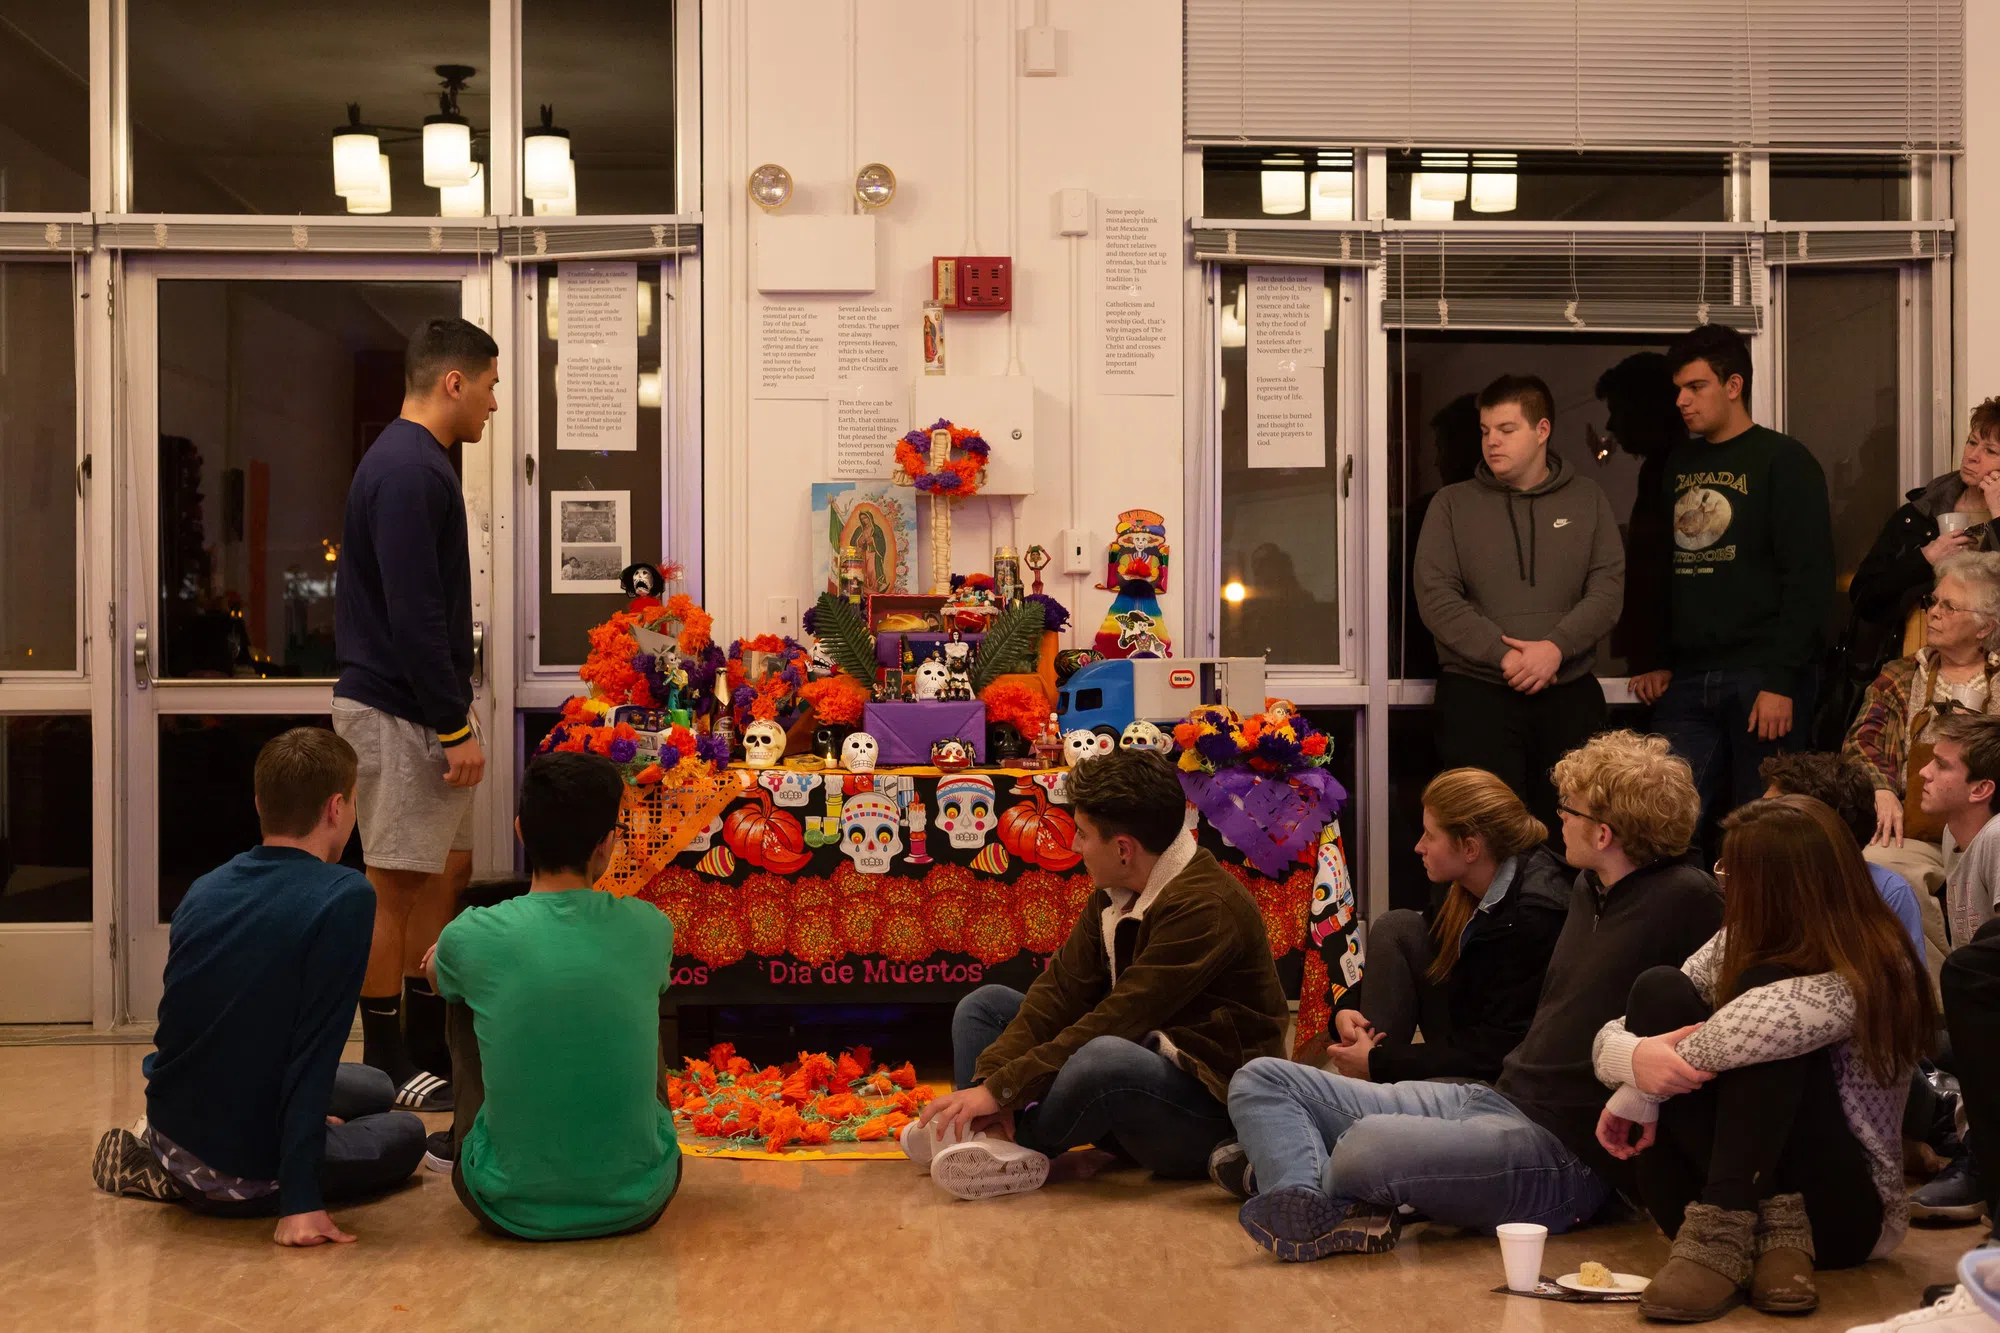 Students surround a commemorative altar for Dia de los Muertos